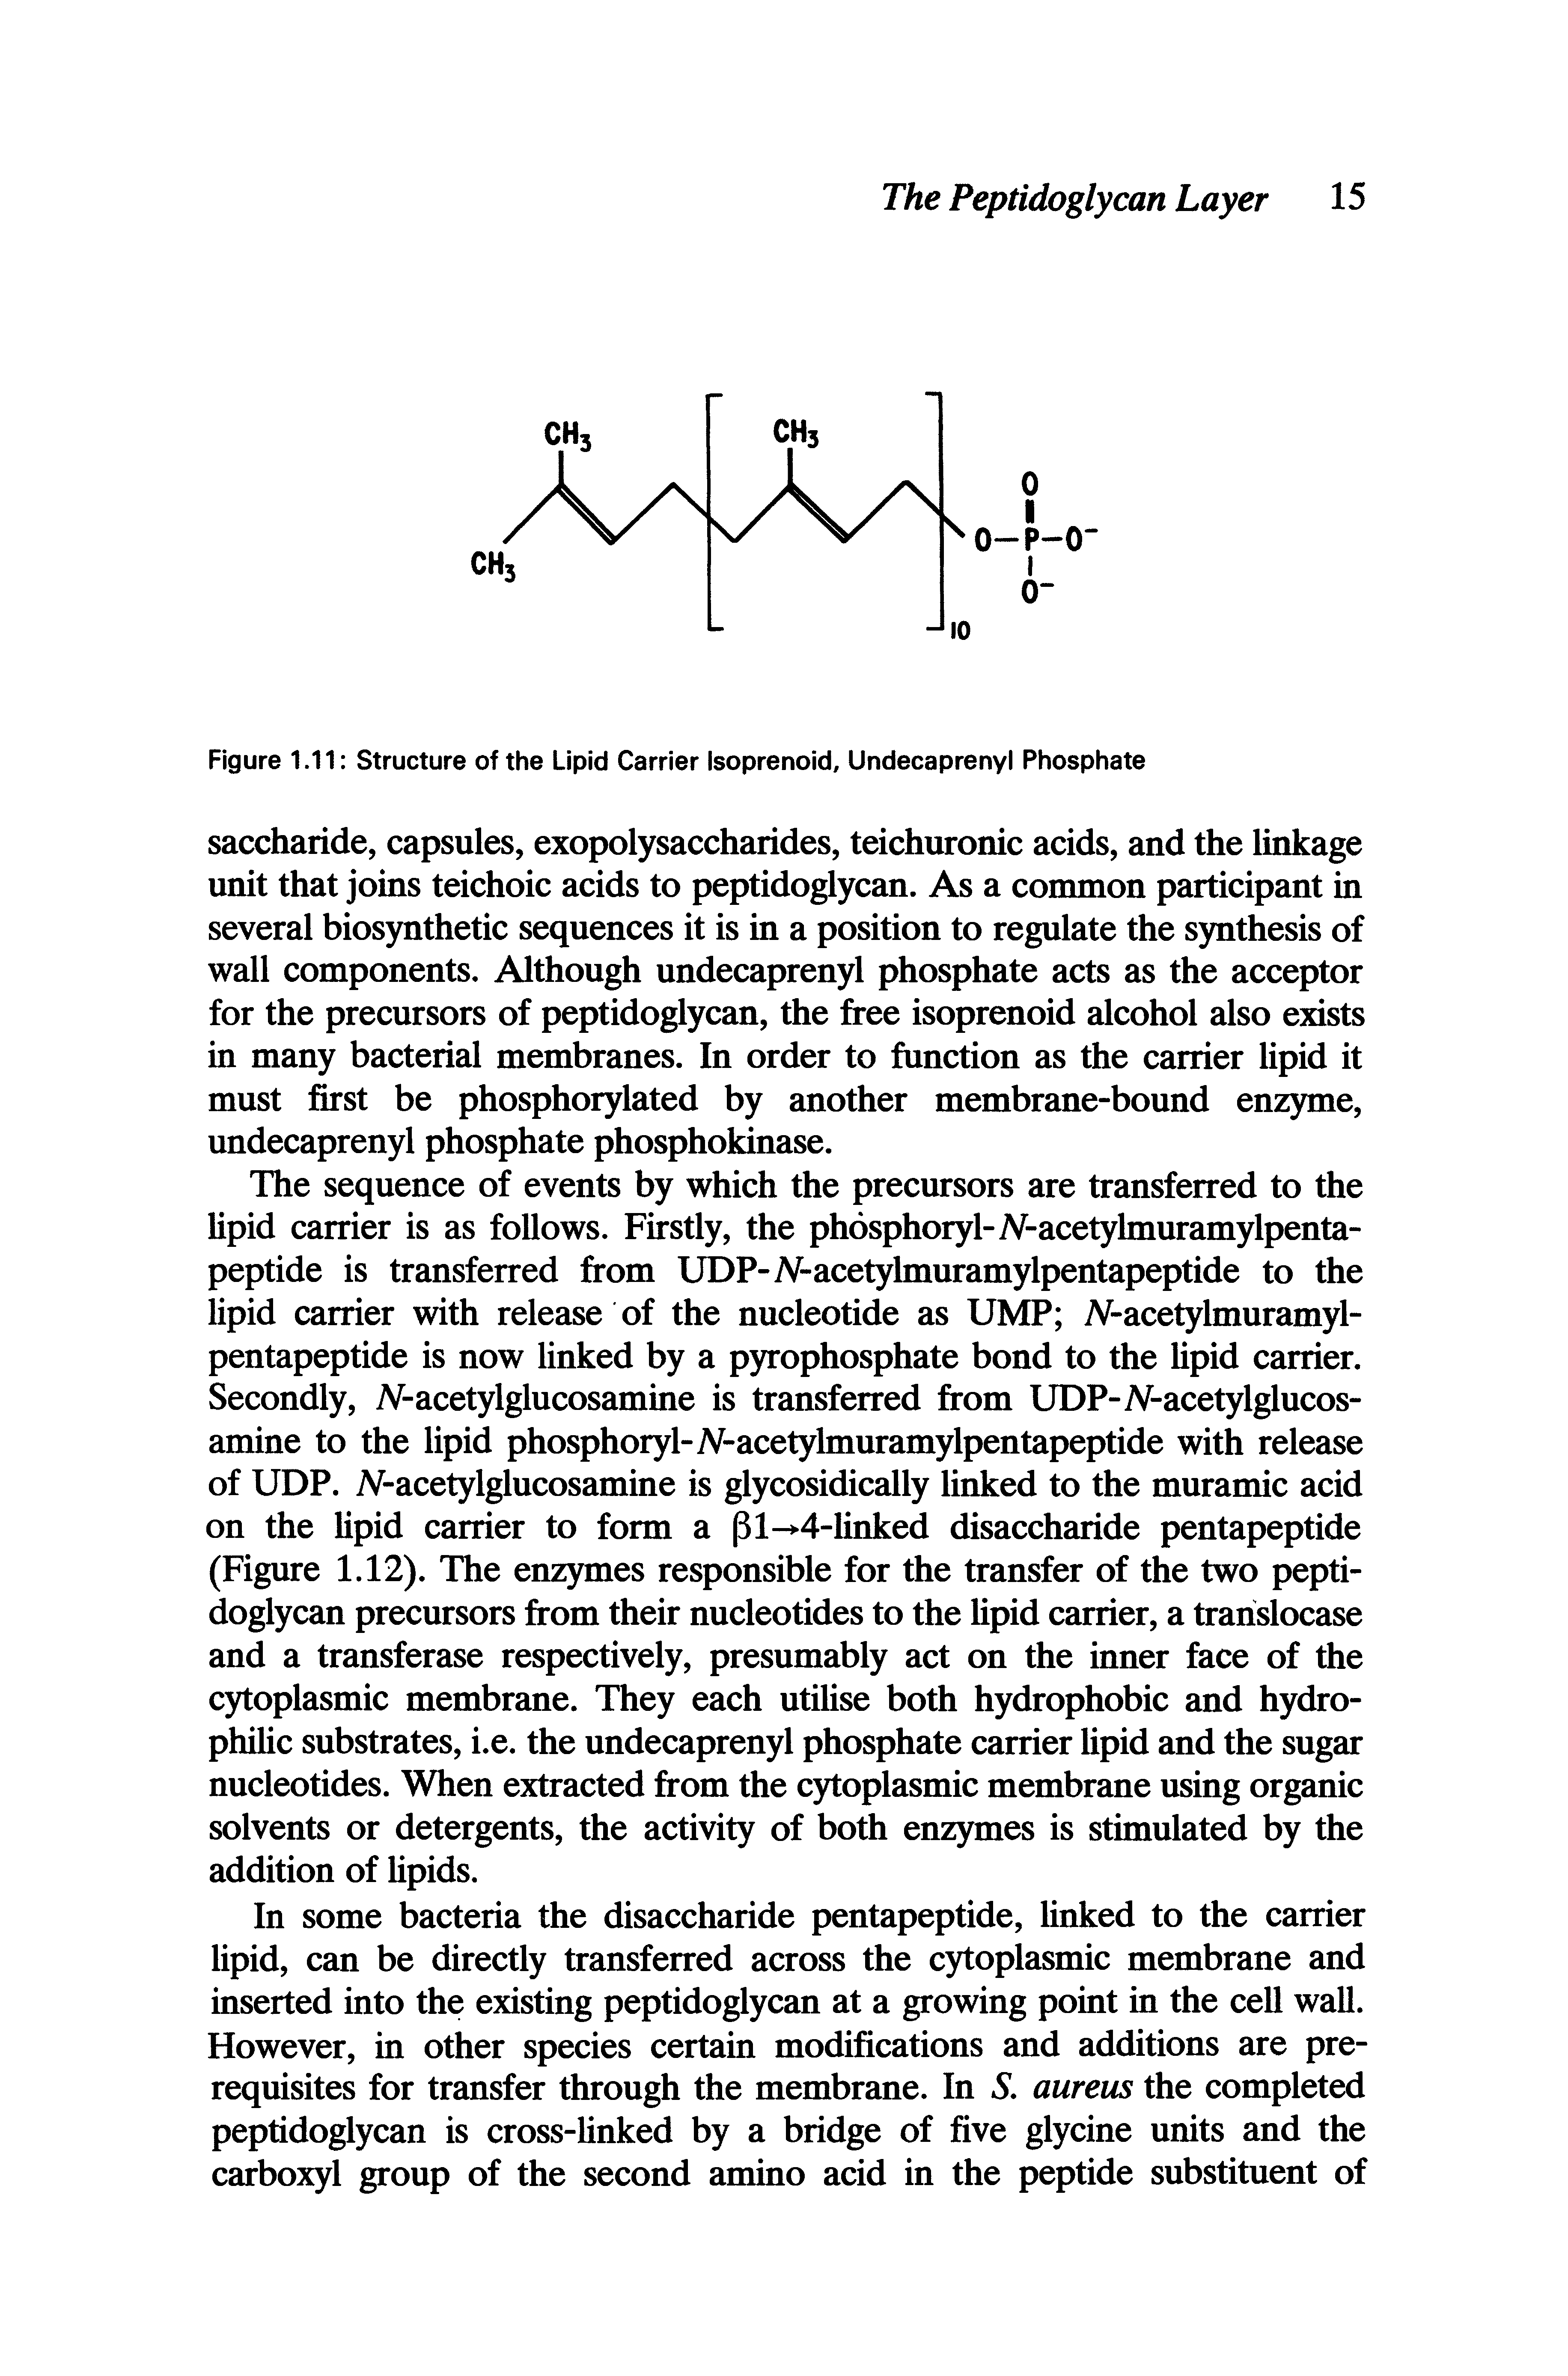 Figure 1.11 Structure of the Lipid Carrier Isoprenoid, Undecaprenyl Phosphate...